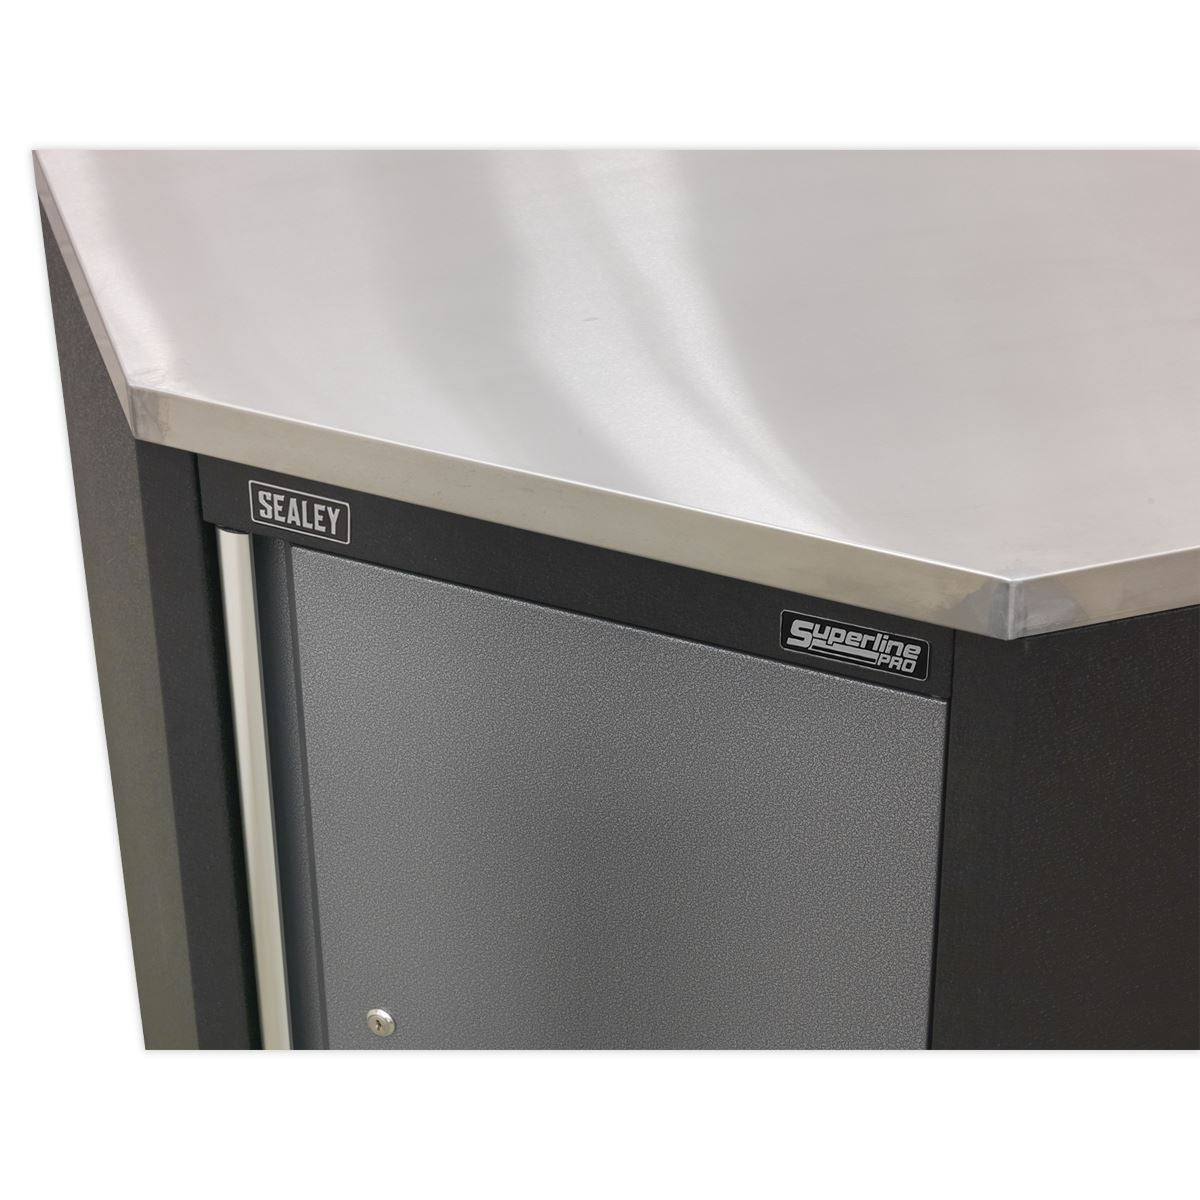 Sealey Superline Pro Stainless Steel Worktop for Modular Corner Cabinet 865mm